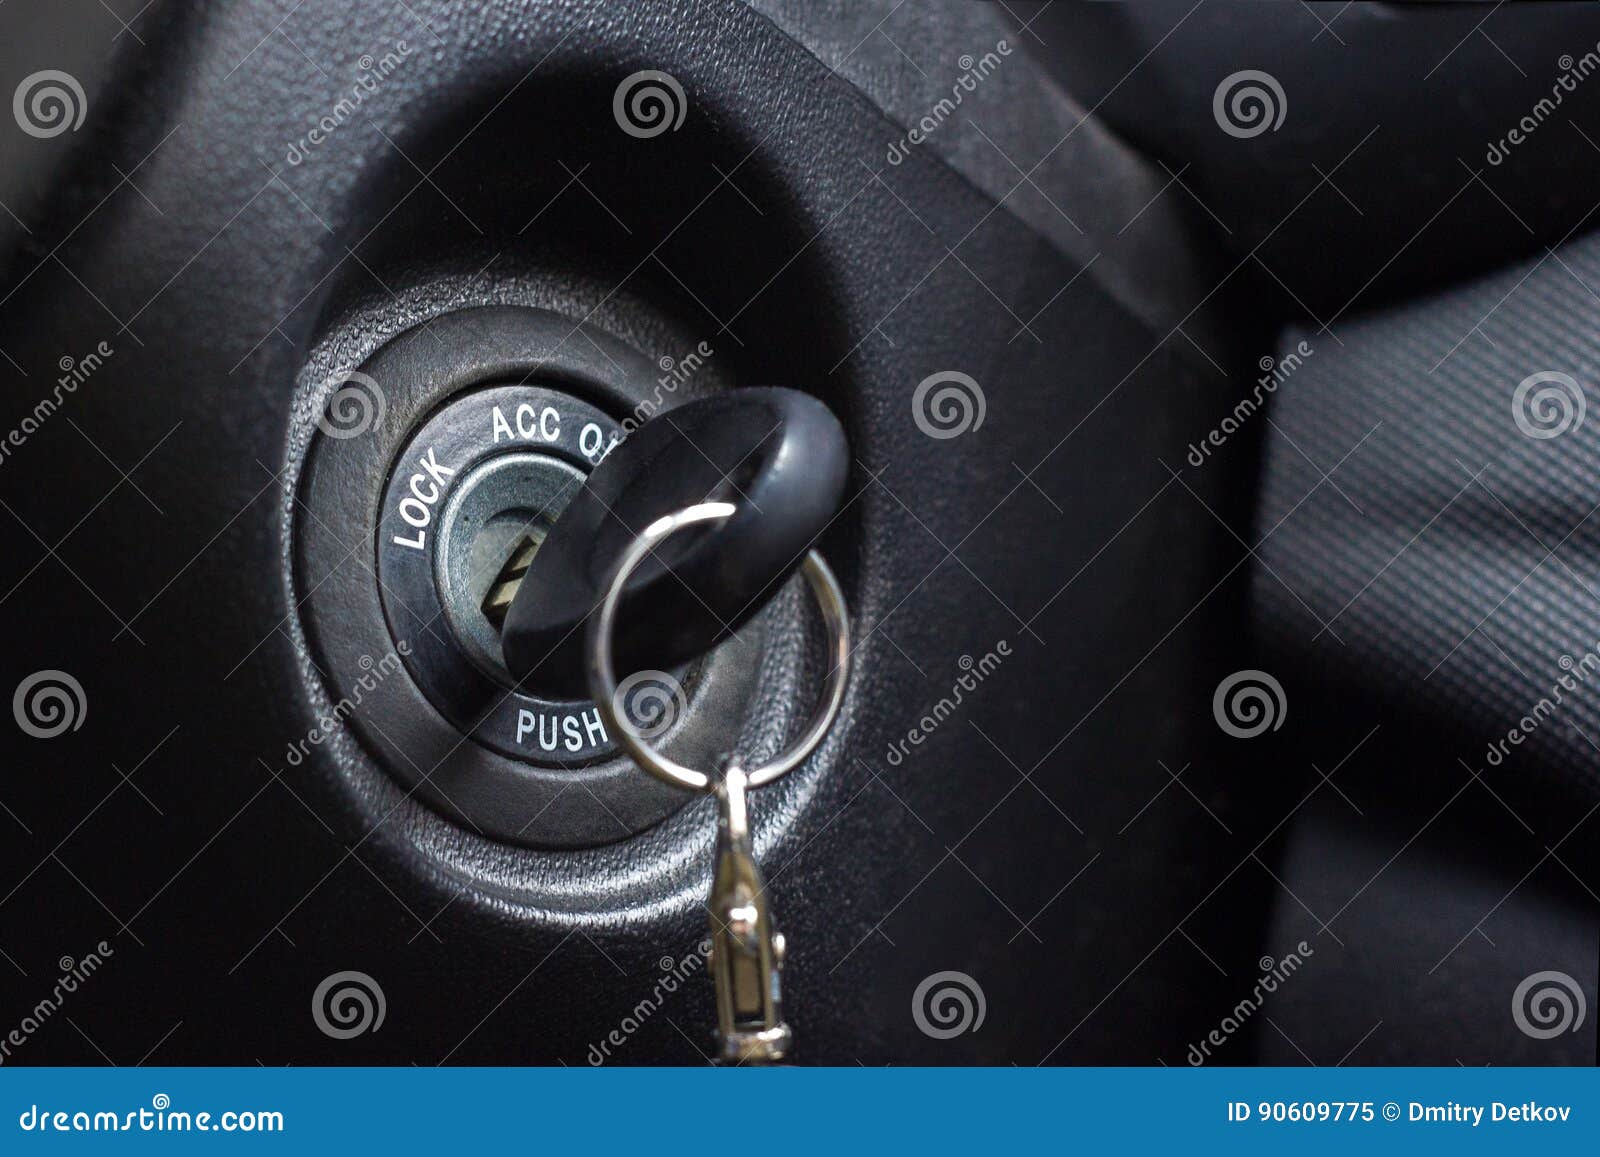 ignition lock car with key